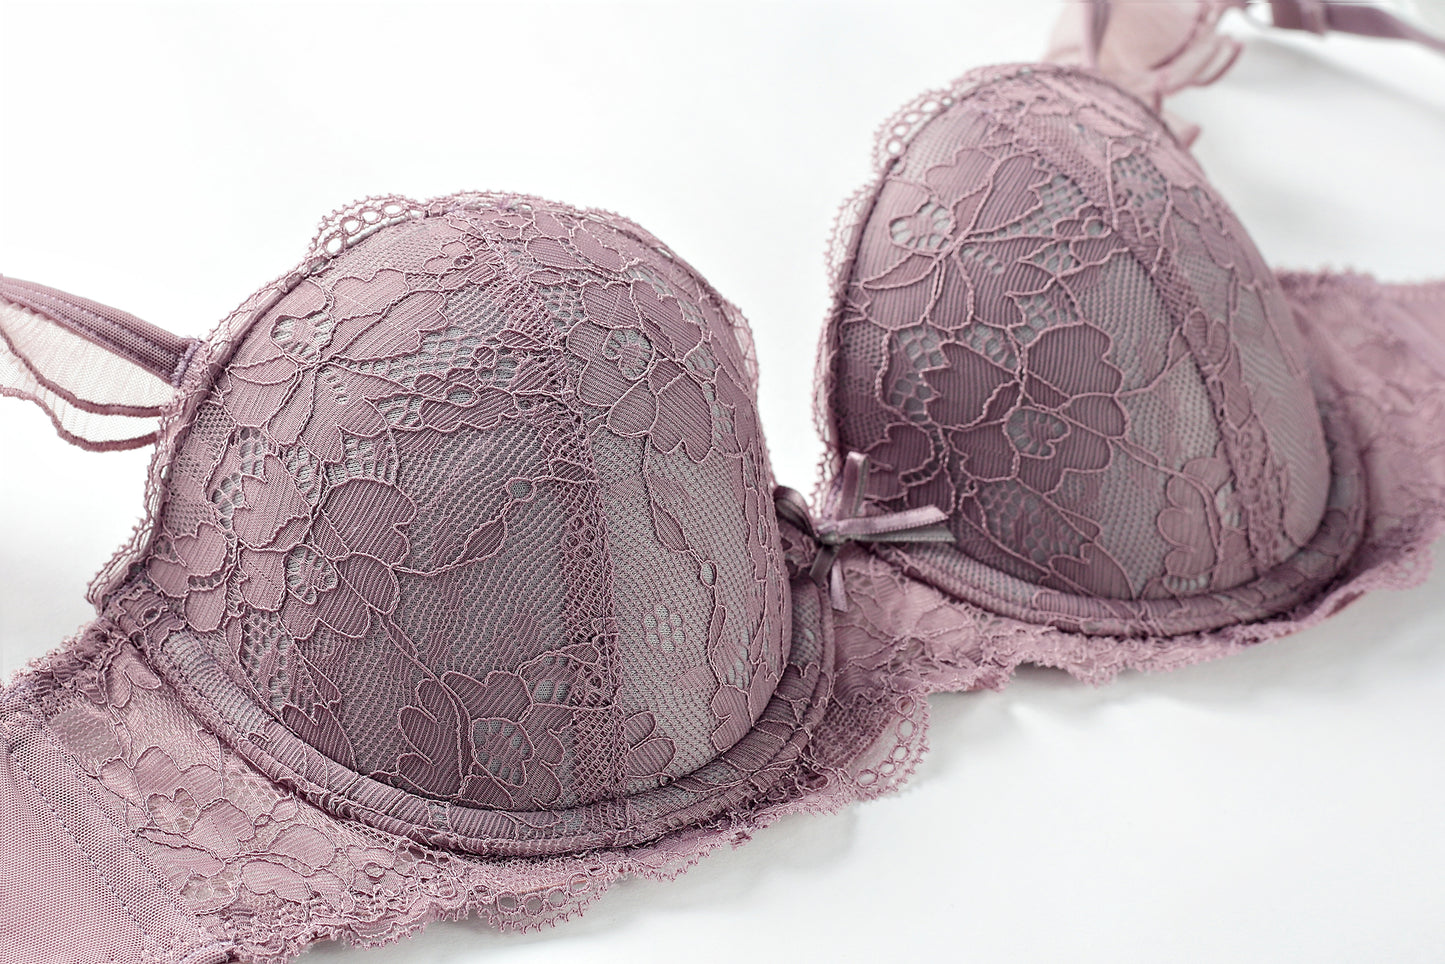 Fragrant Lilac Elegance: Lace & Mesh Lingerie Set